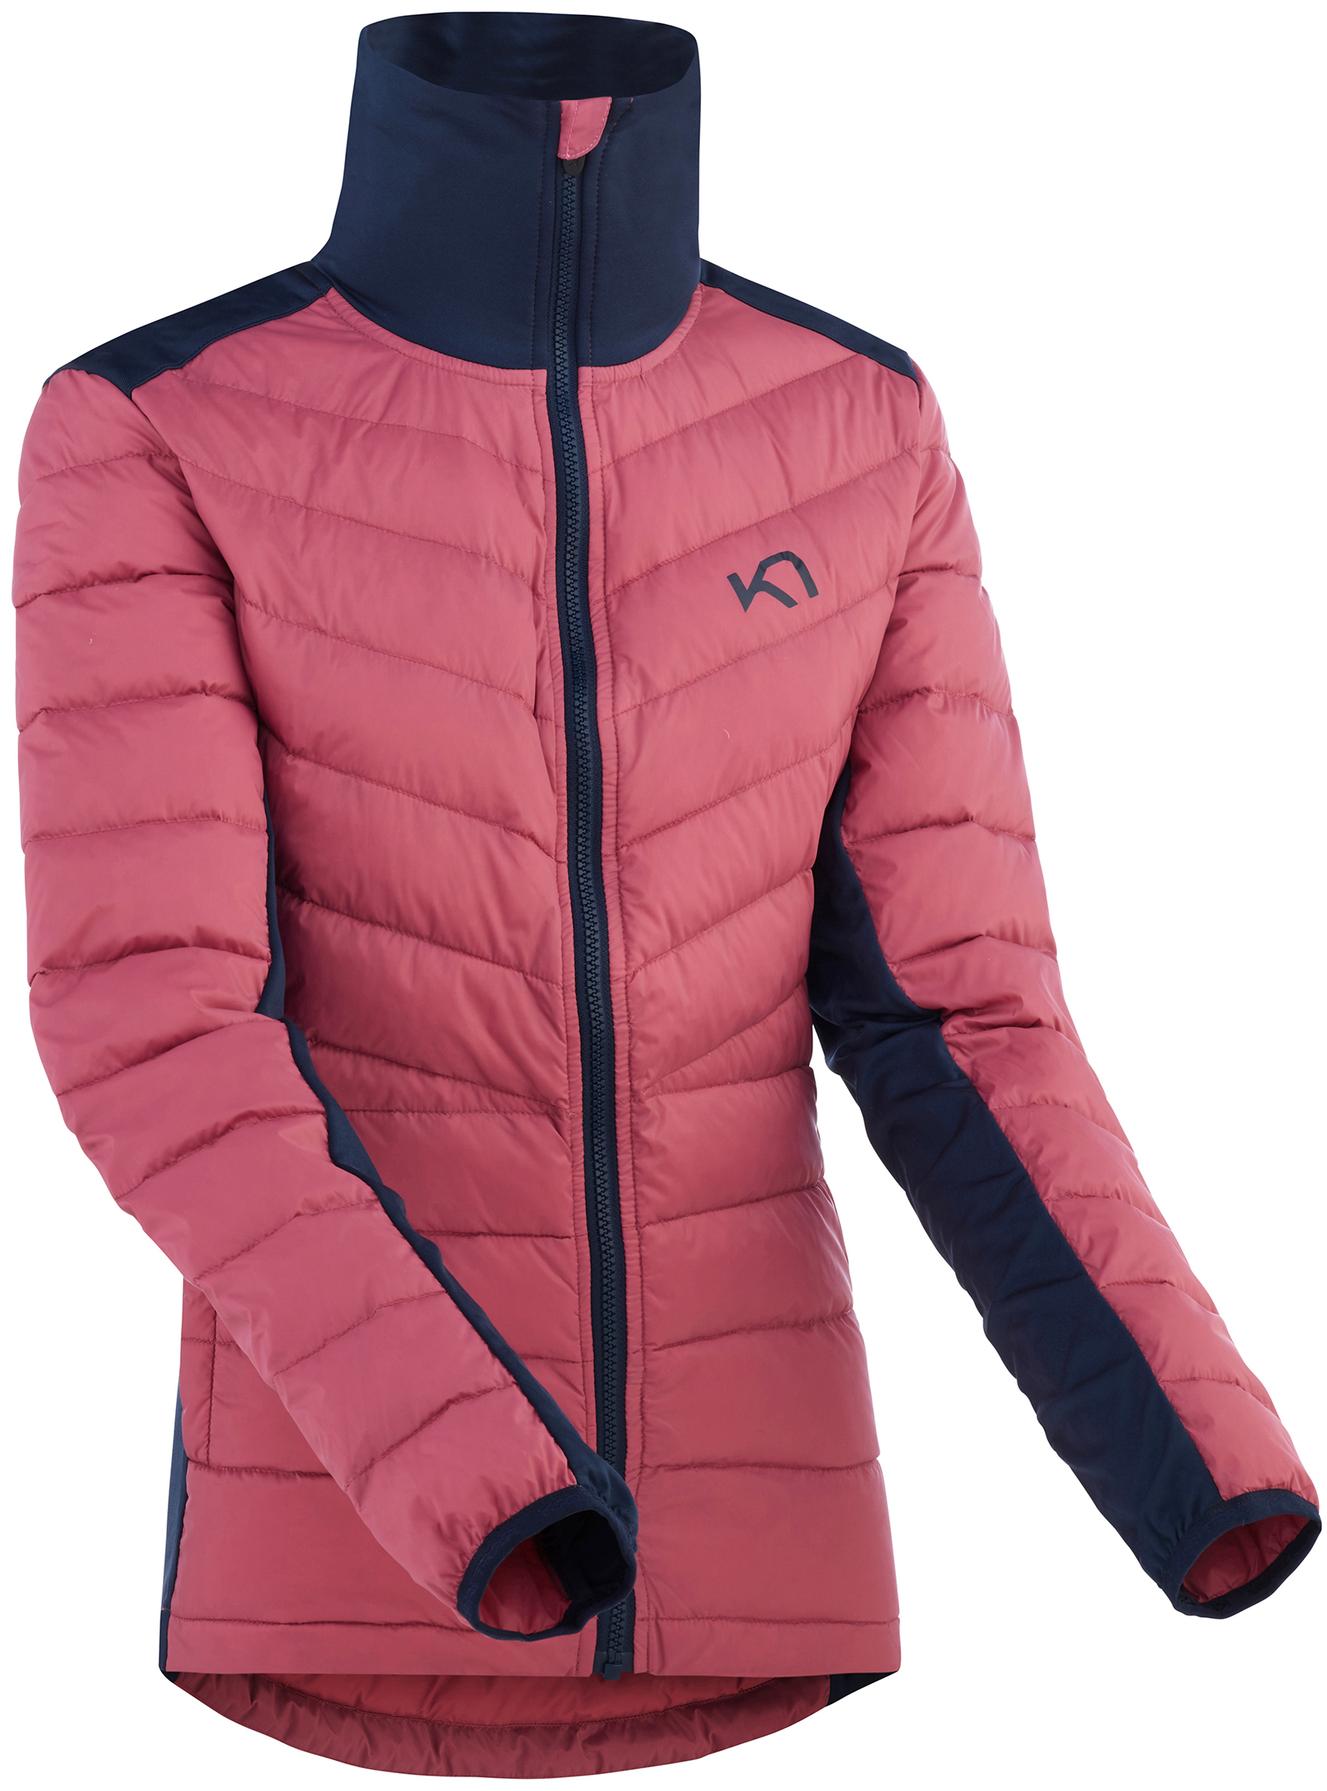 Куртка Для Активного Отдыха Karri Traa 2020-21 Eva Hybrid Lilac (Us:m), 2020-21